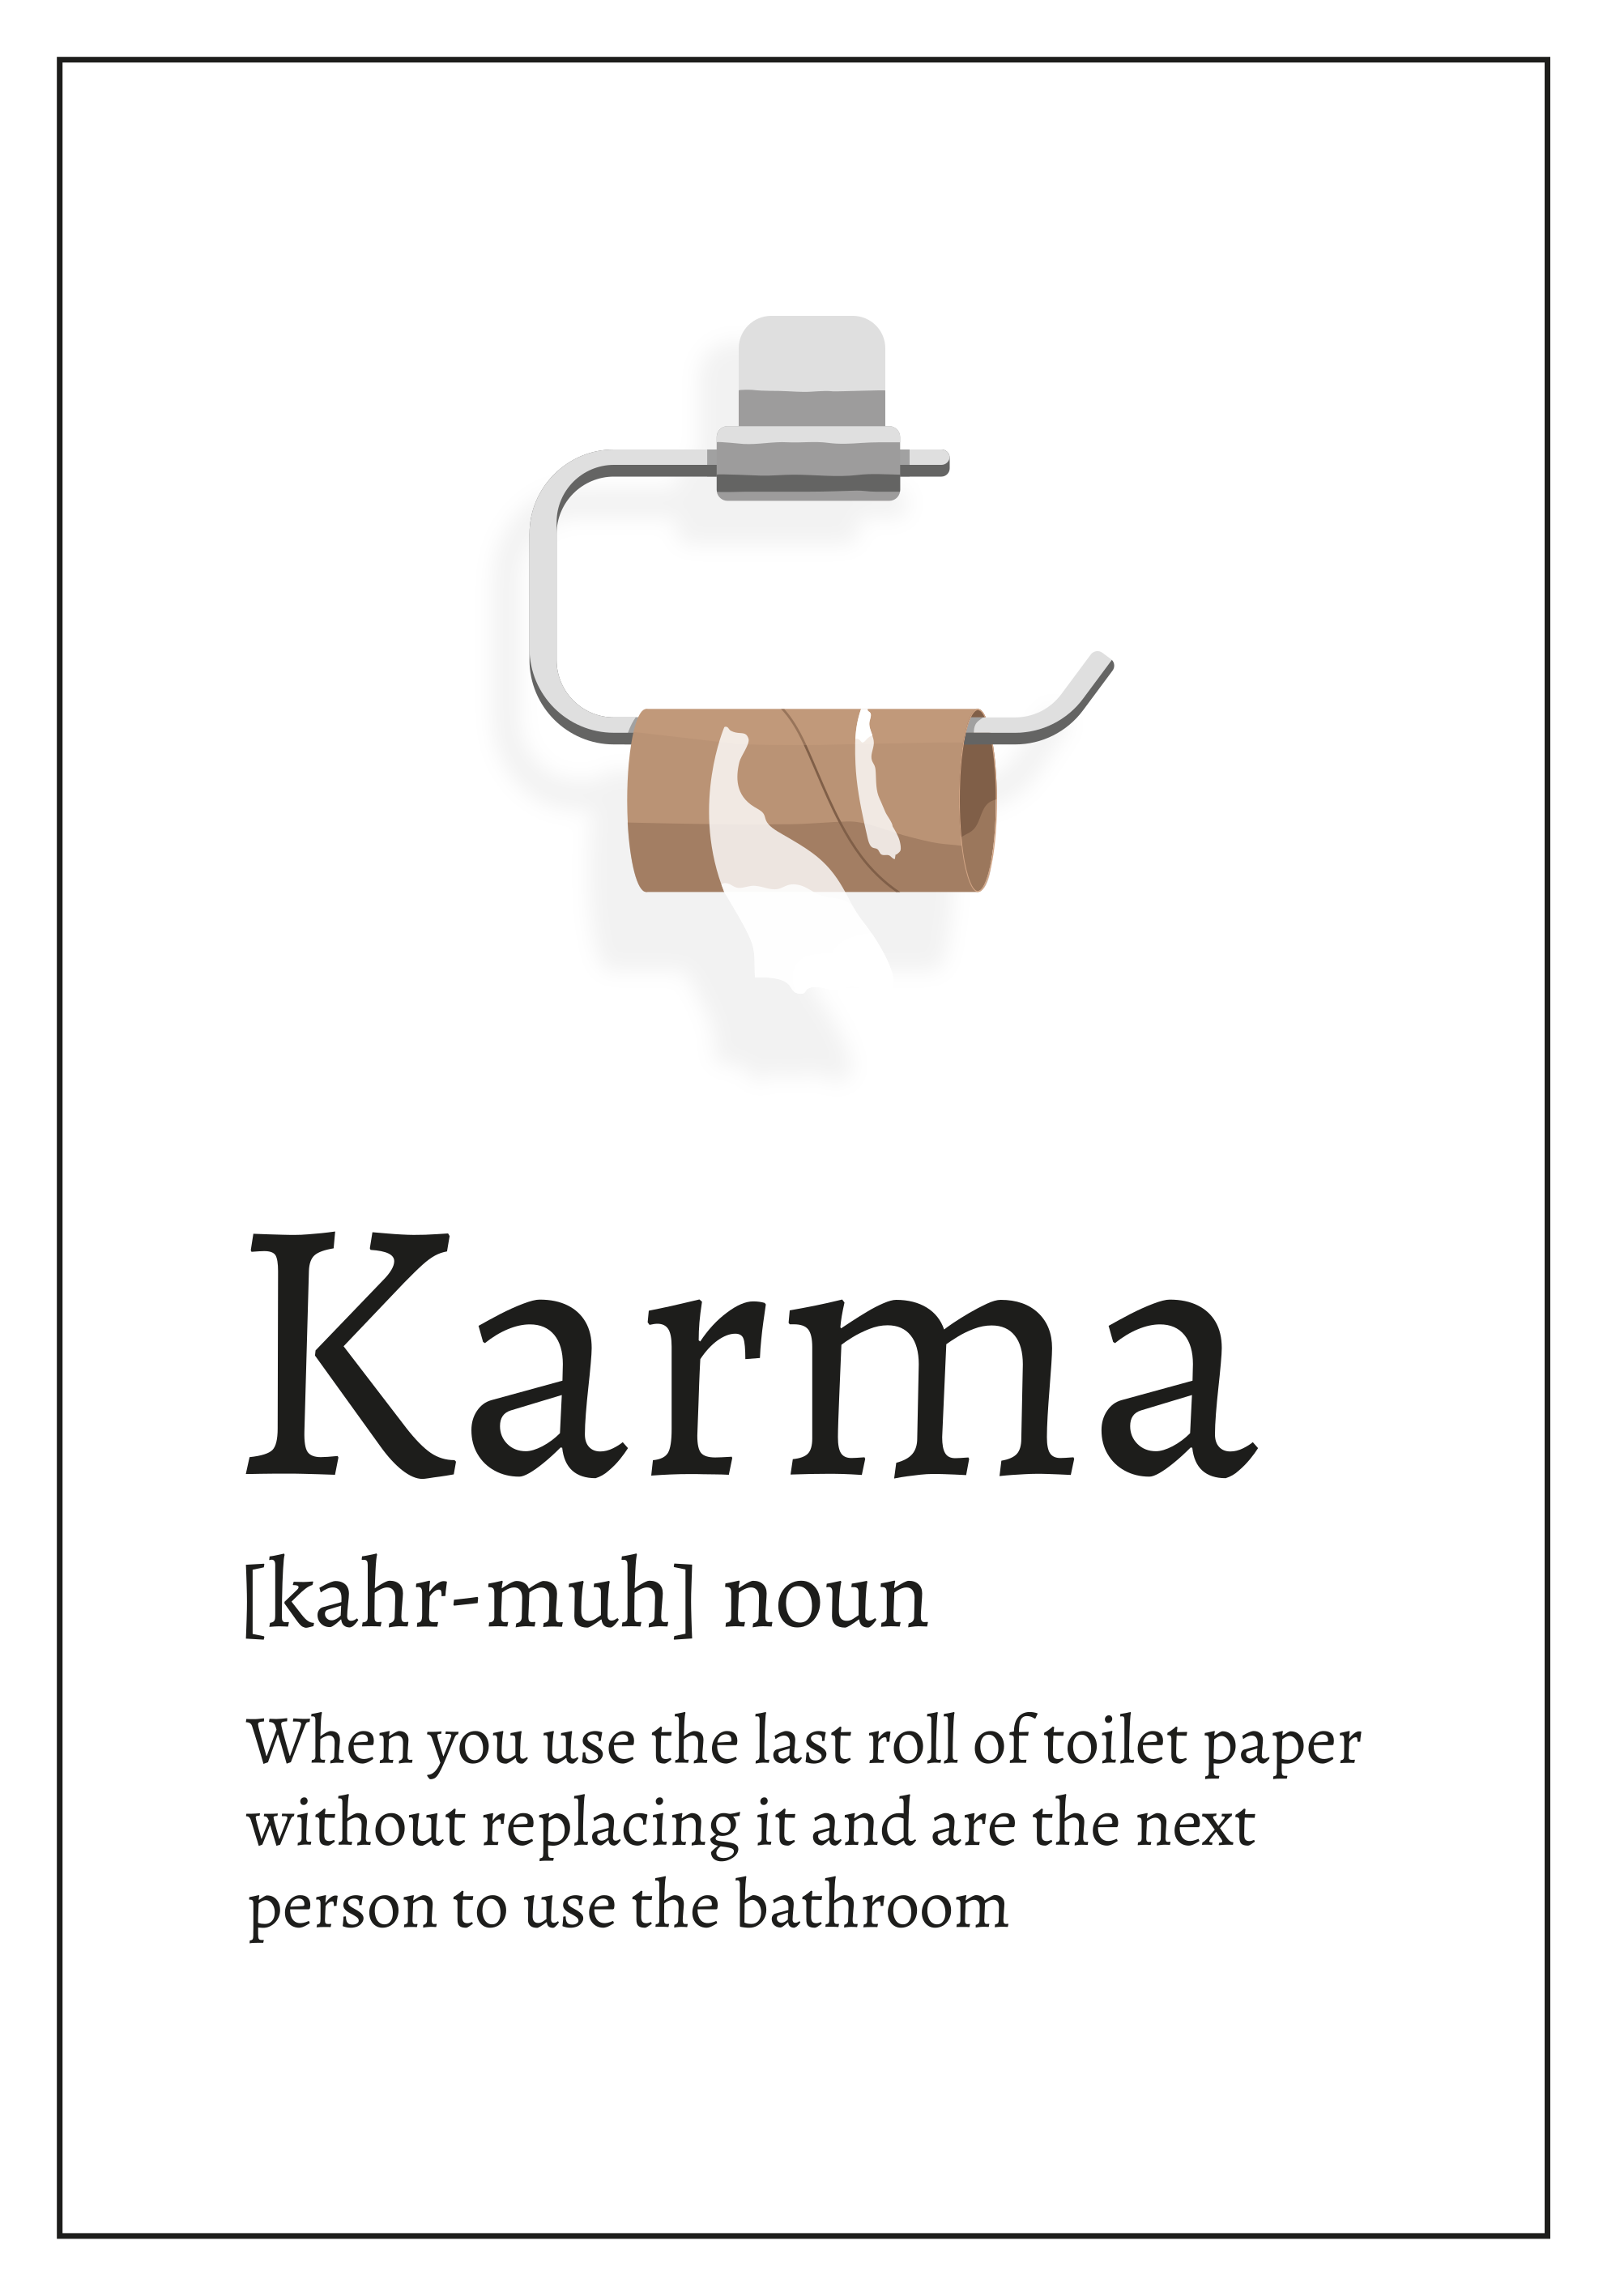 Karma definition poster - TenStickers